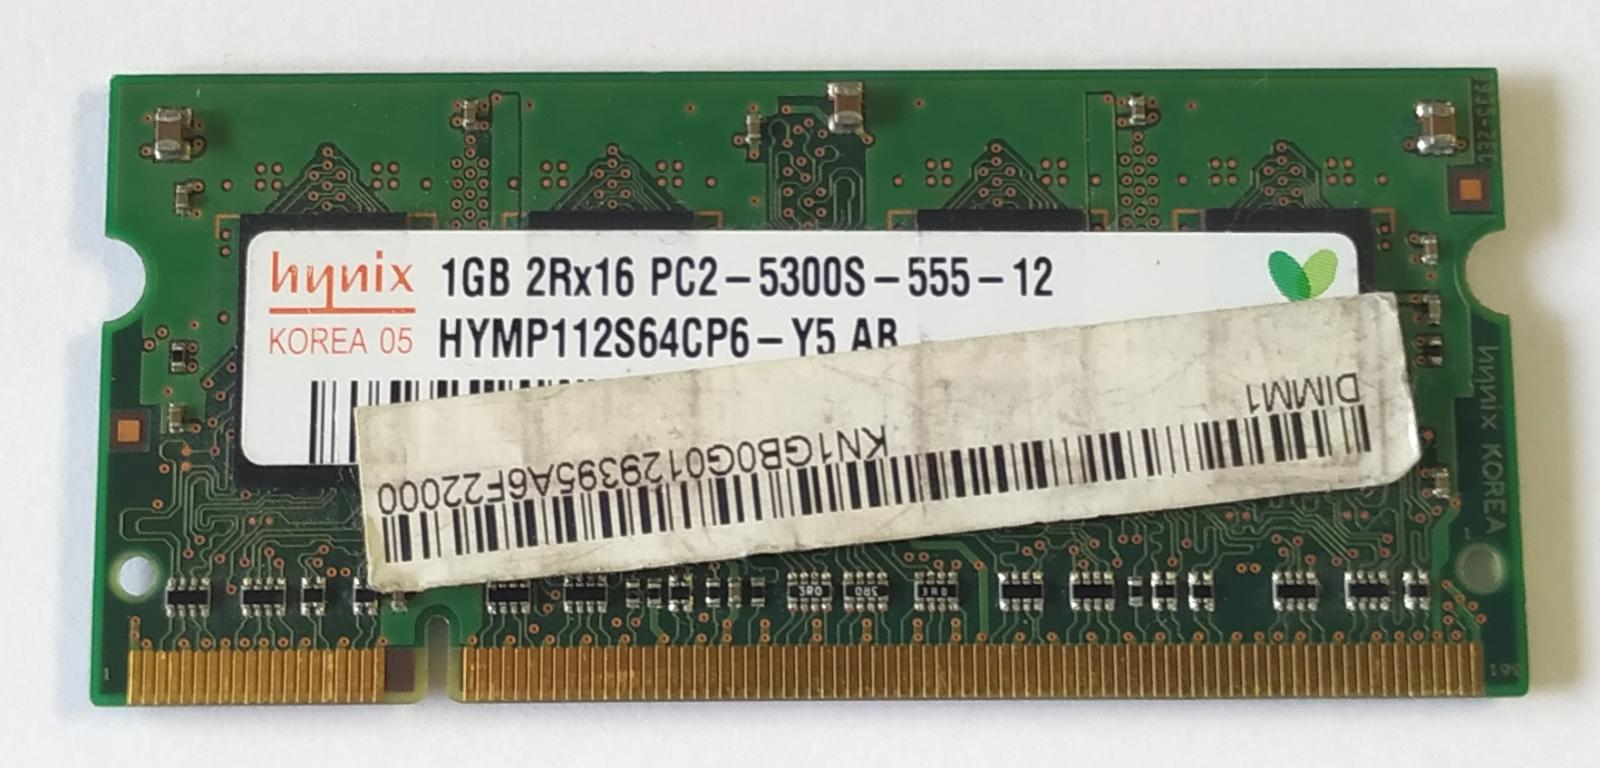 Pamäť RAM do NB Hynix HYMP112S64CP6-Y5 AB 1GB 667MHz DDR2 - Notebooky, príslušenstvo